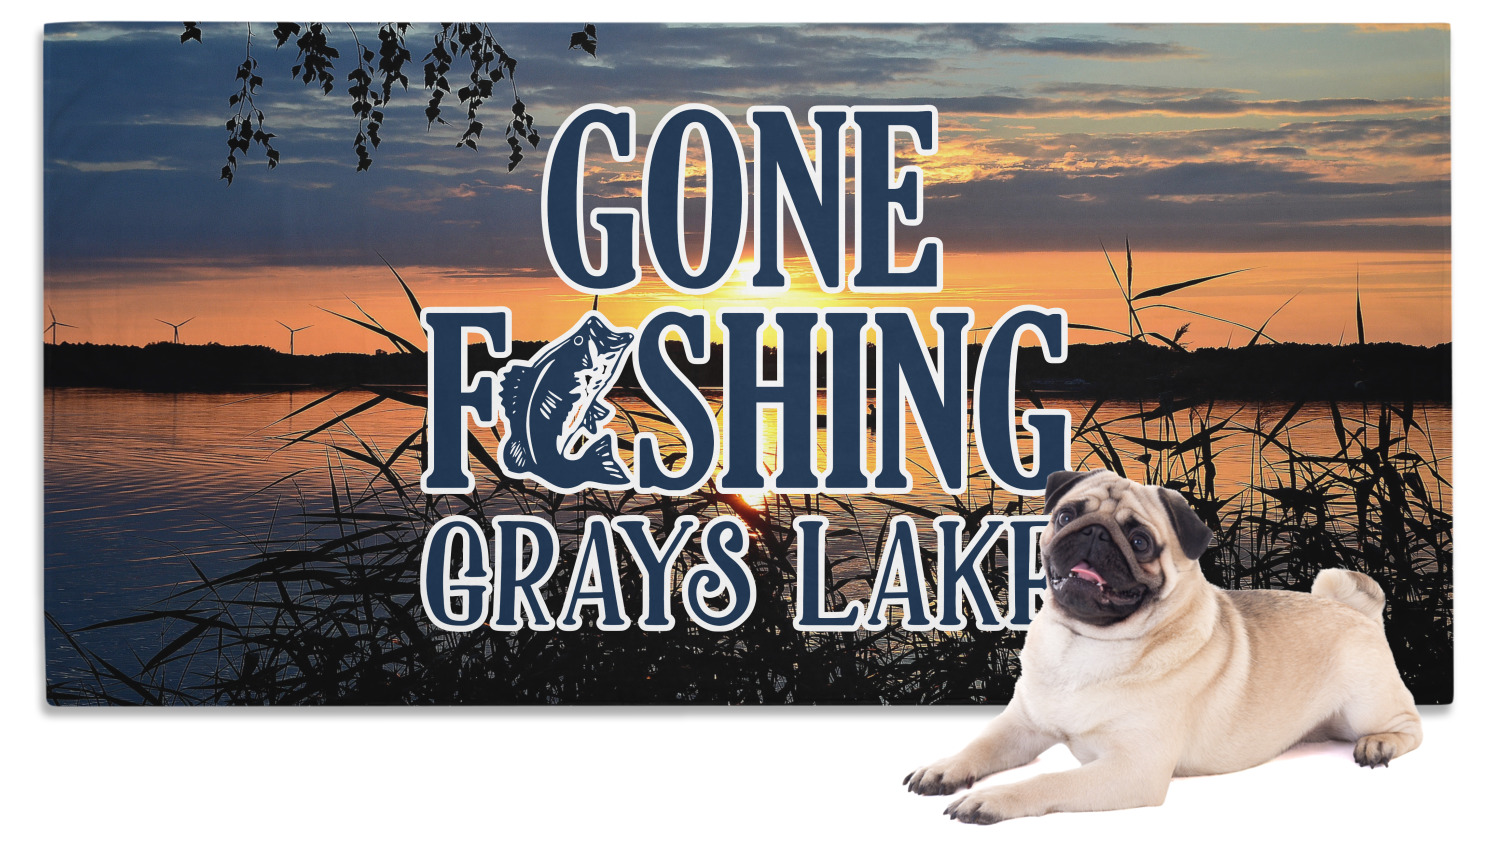 Custom Gone Fishing Dog Towel (Personalized)